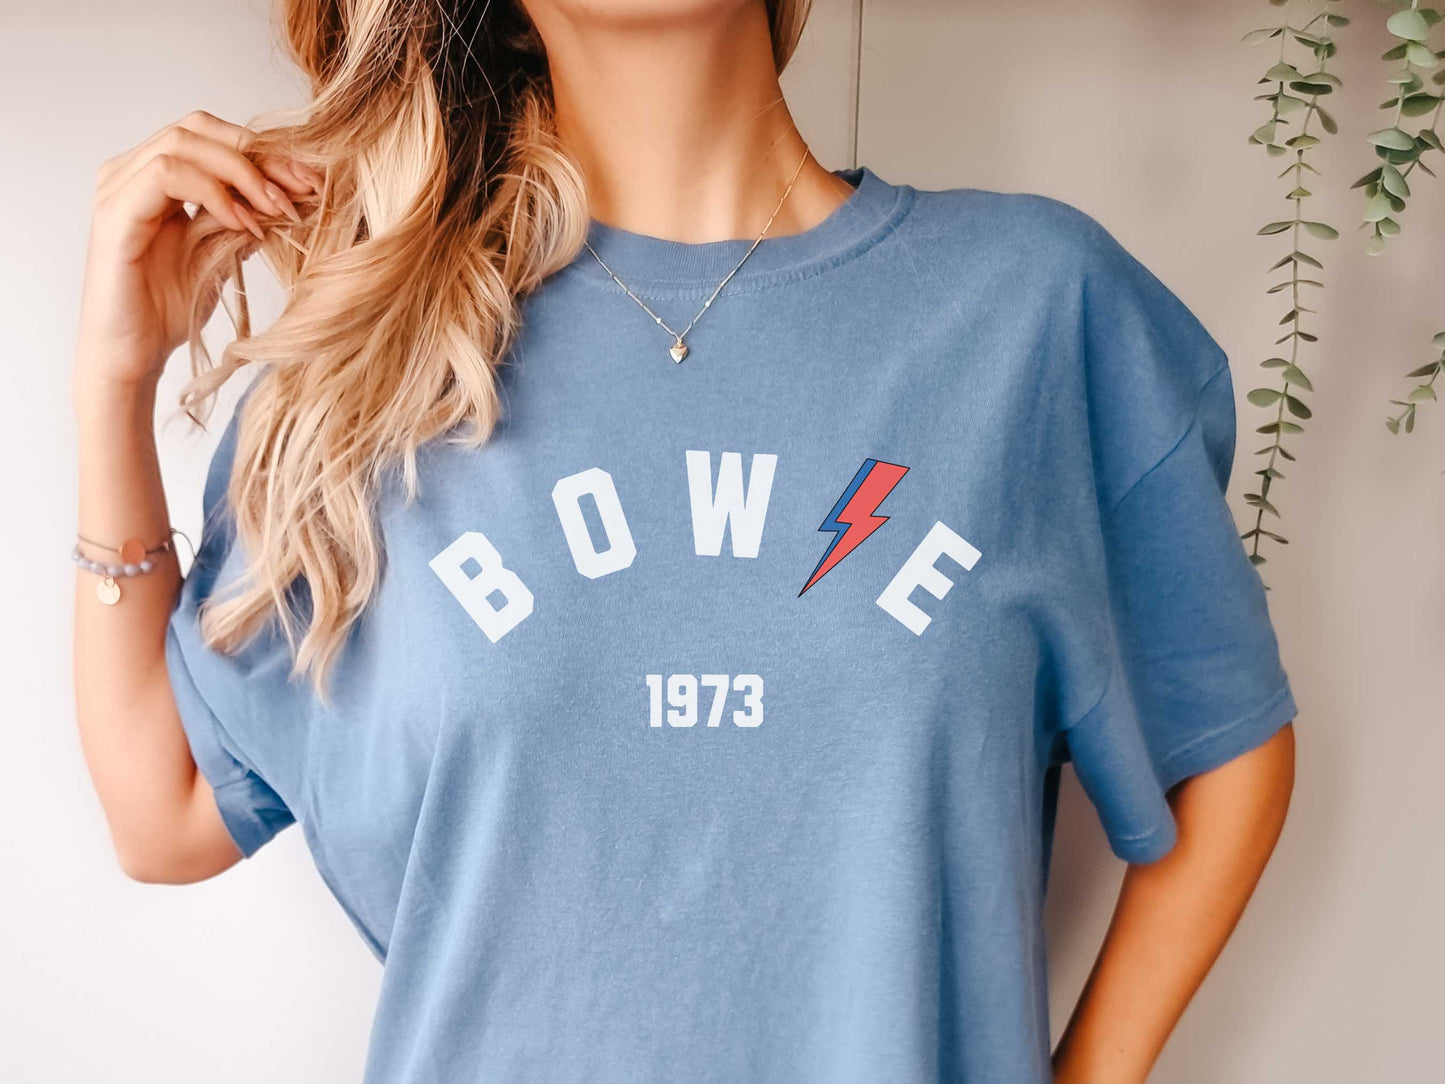 David Bowie "Bowie 1973" T-Shirt in Blue Jean